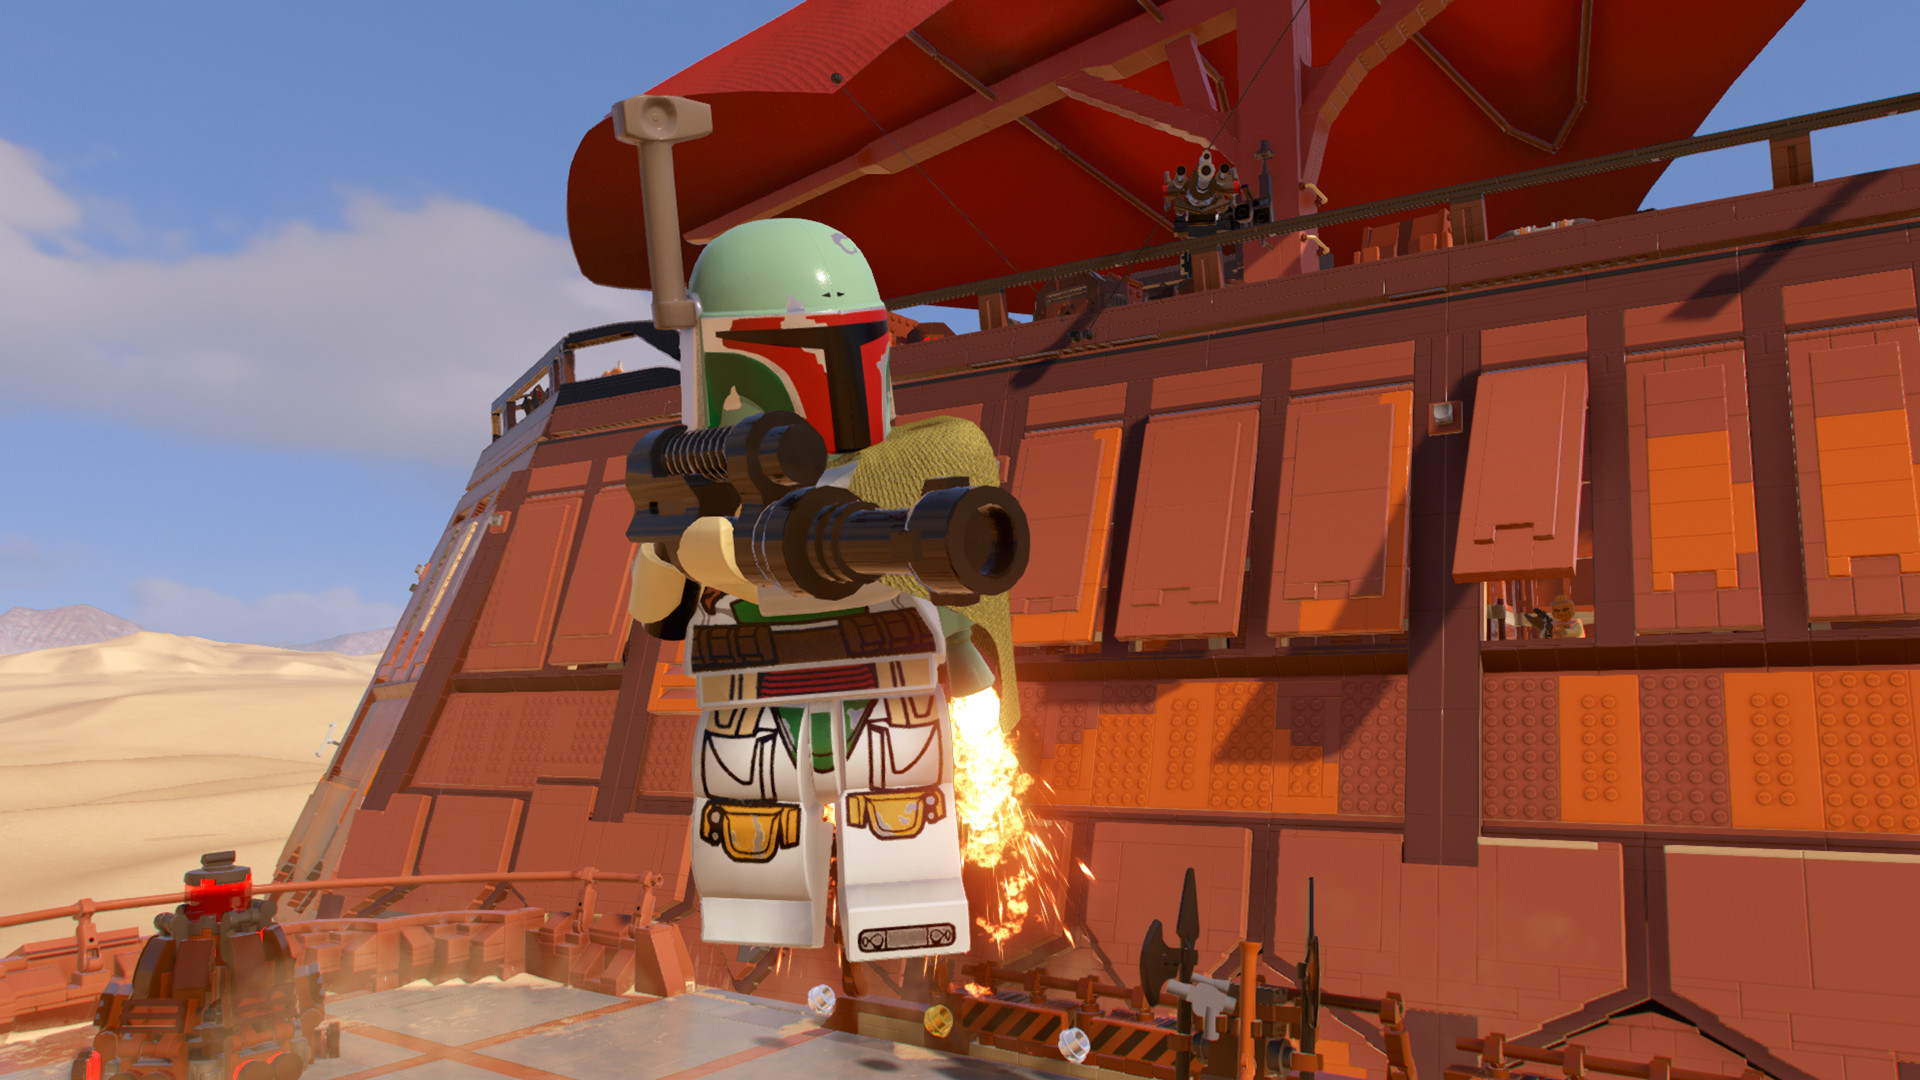 LEGO Star Wars: The Skywalker Saga PlayStation 4 Account pixelpuffin.net Activation Link [$ 13.55]